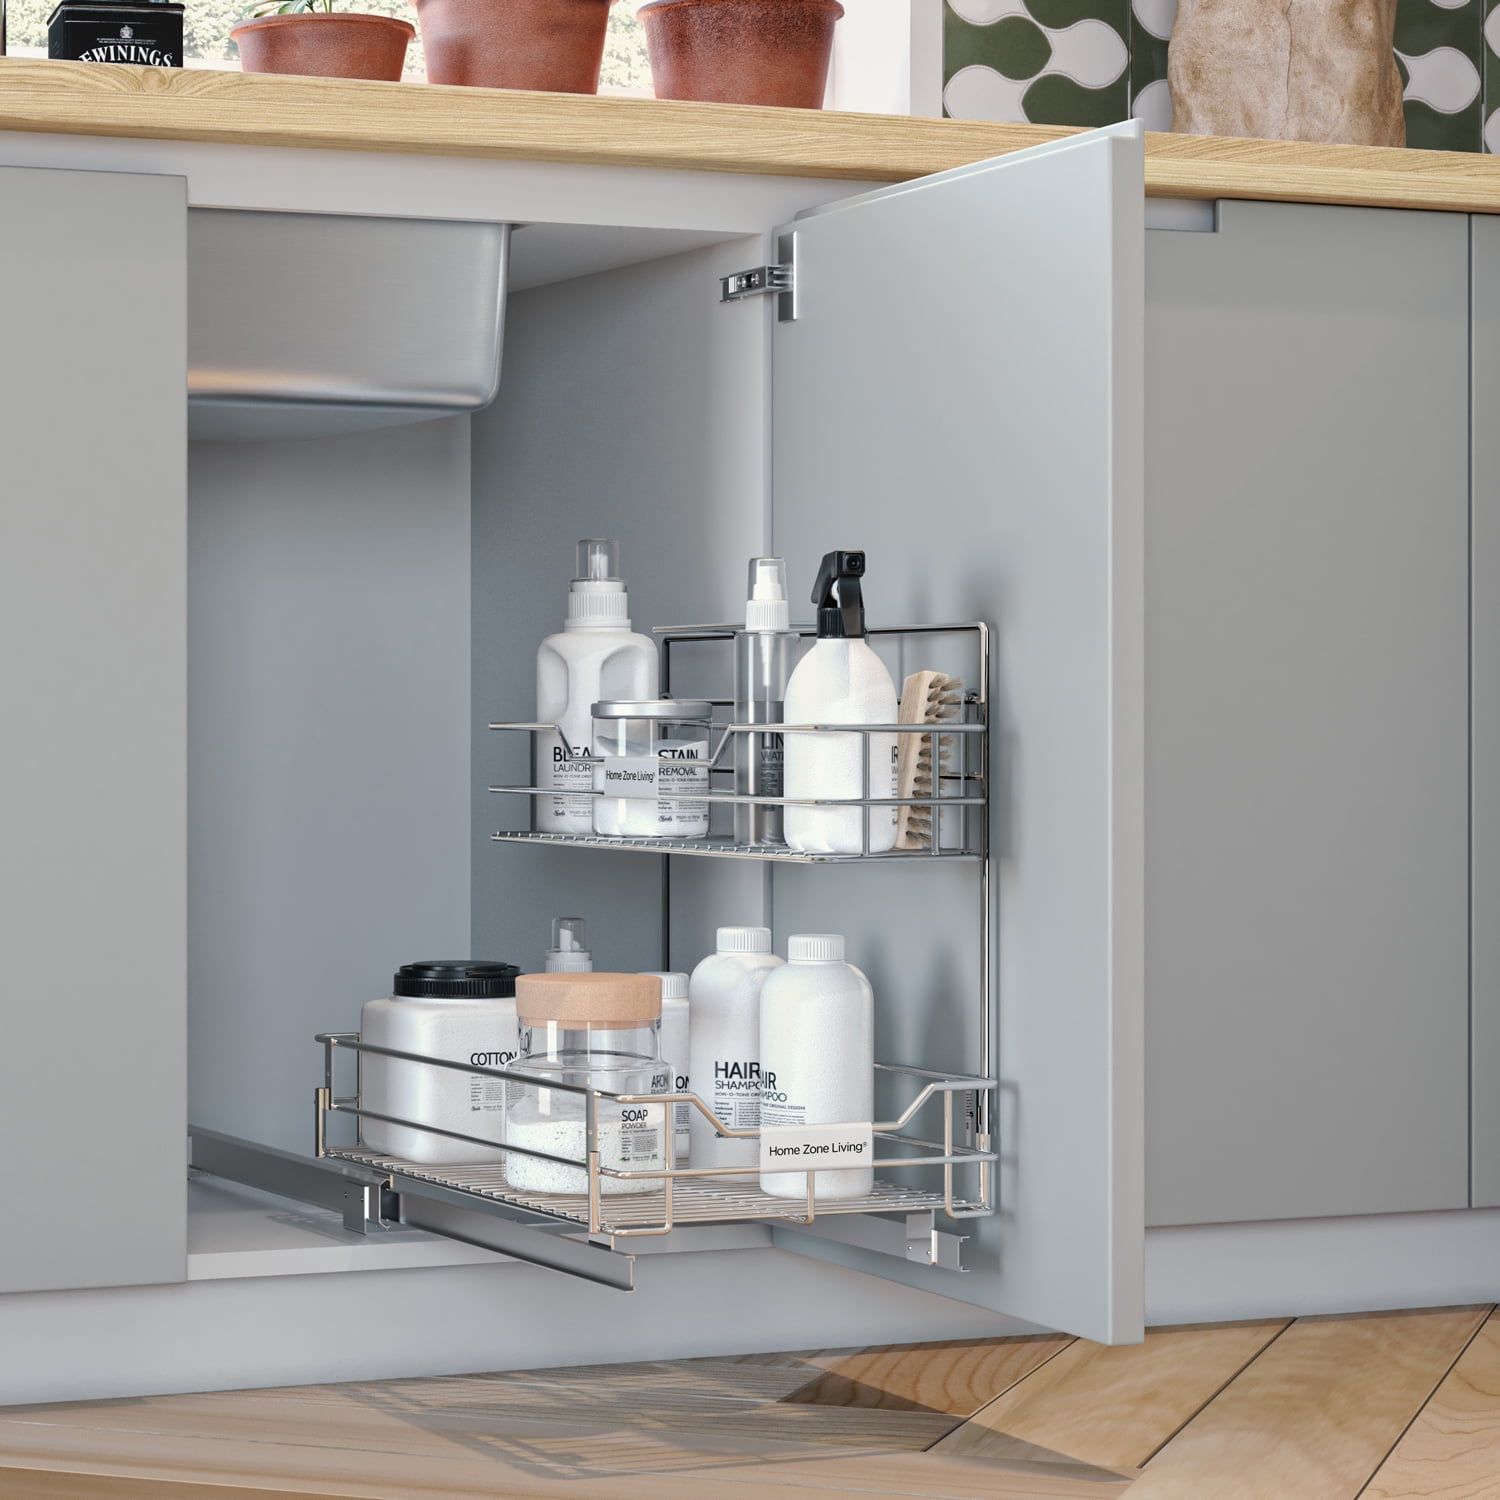 2 Tier Expandable Adjustable Under Sink Shelf Organizer Unit Kitchen Shelves New 